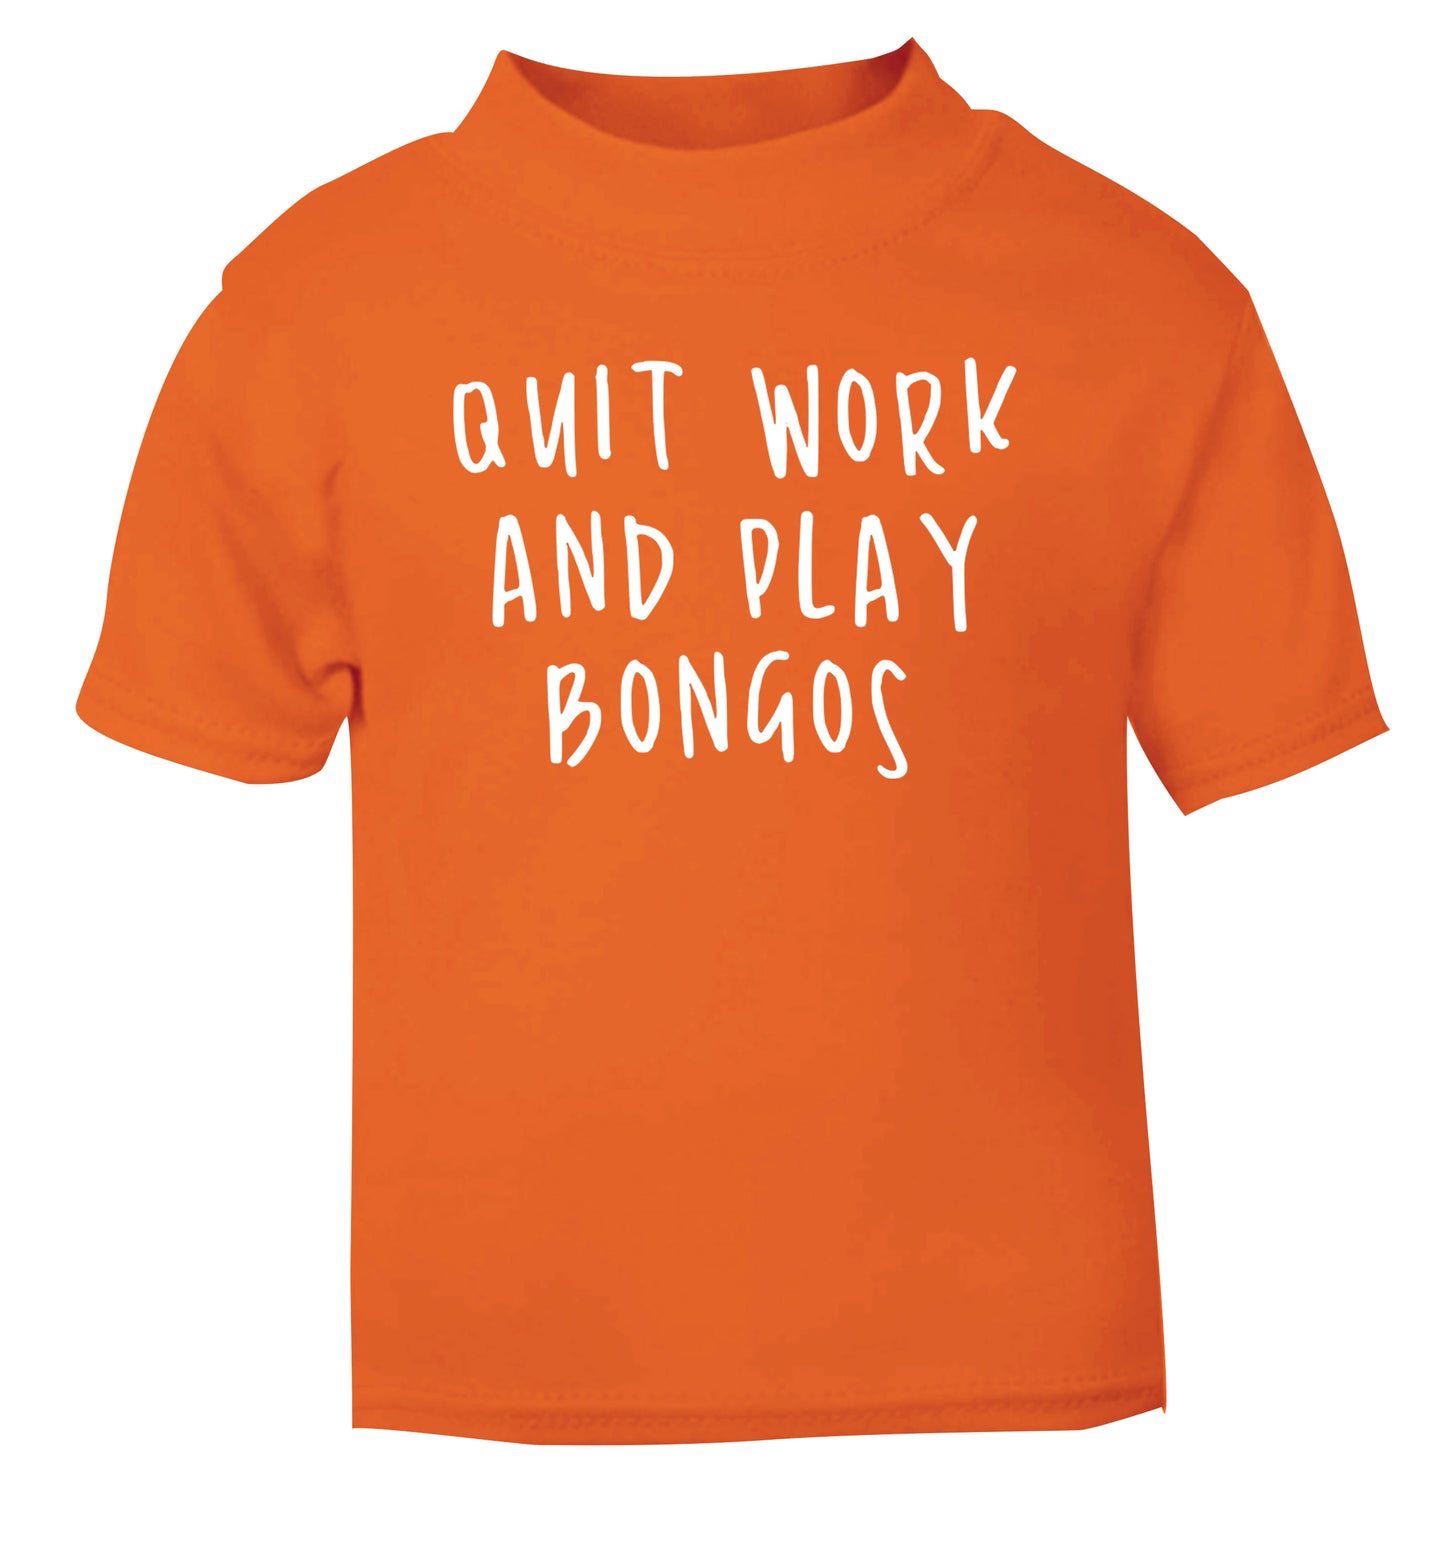 Quit work and play bongos orange Baby Toddler Tshirt 2 Years